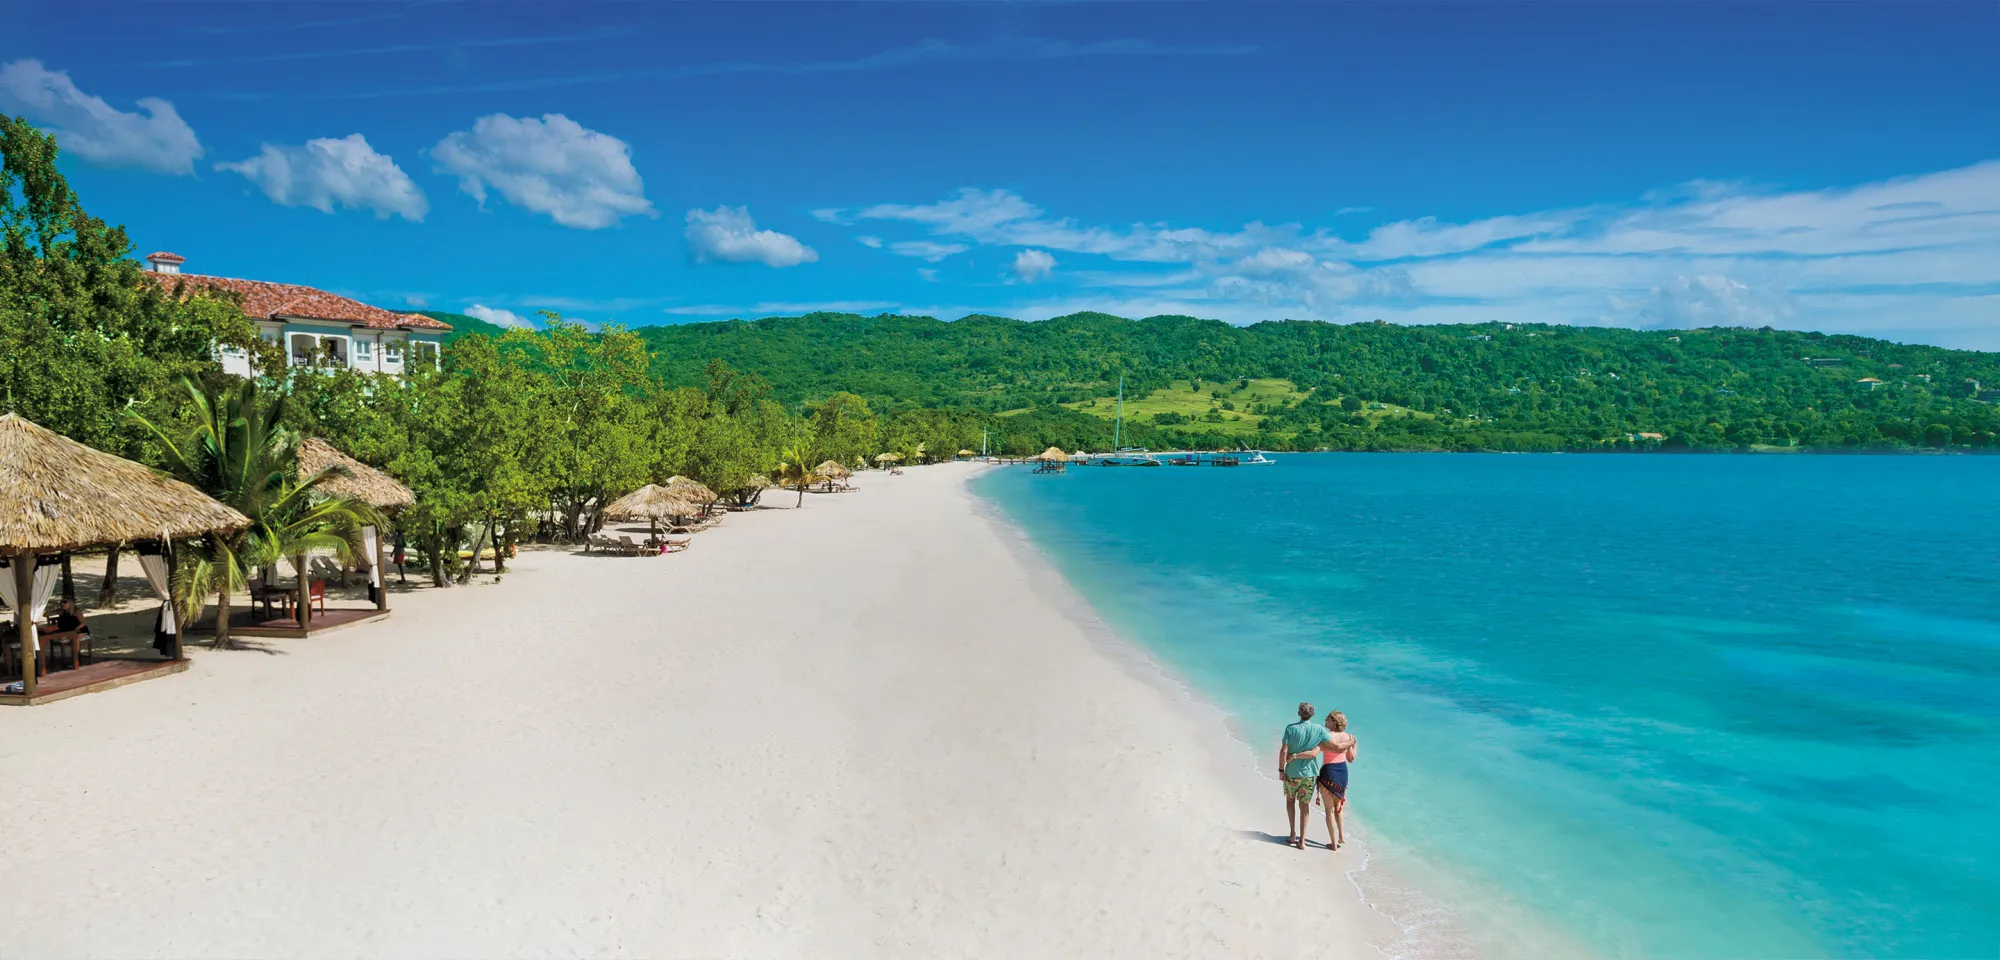 19 Reasons to Love Jamaica